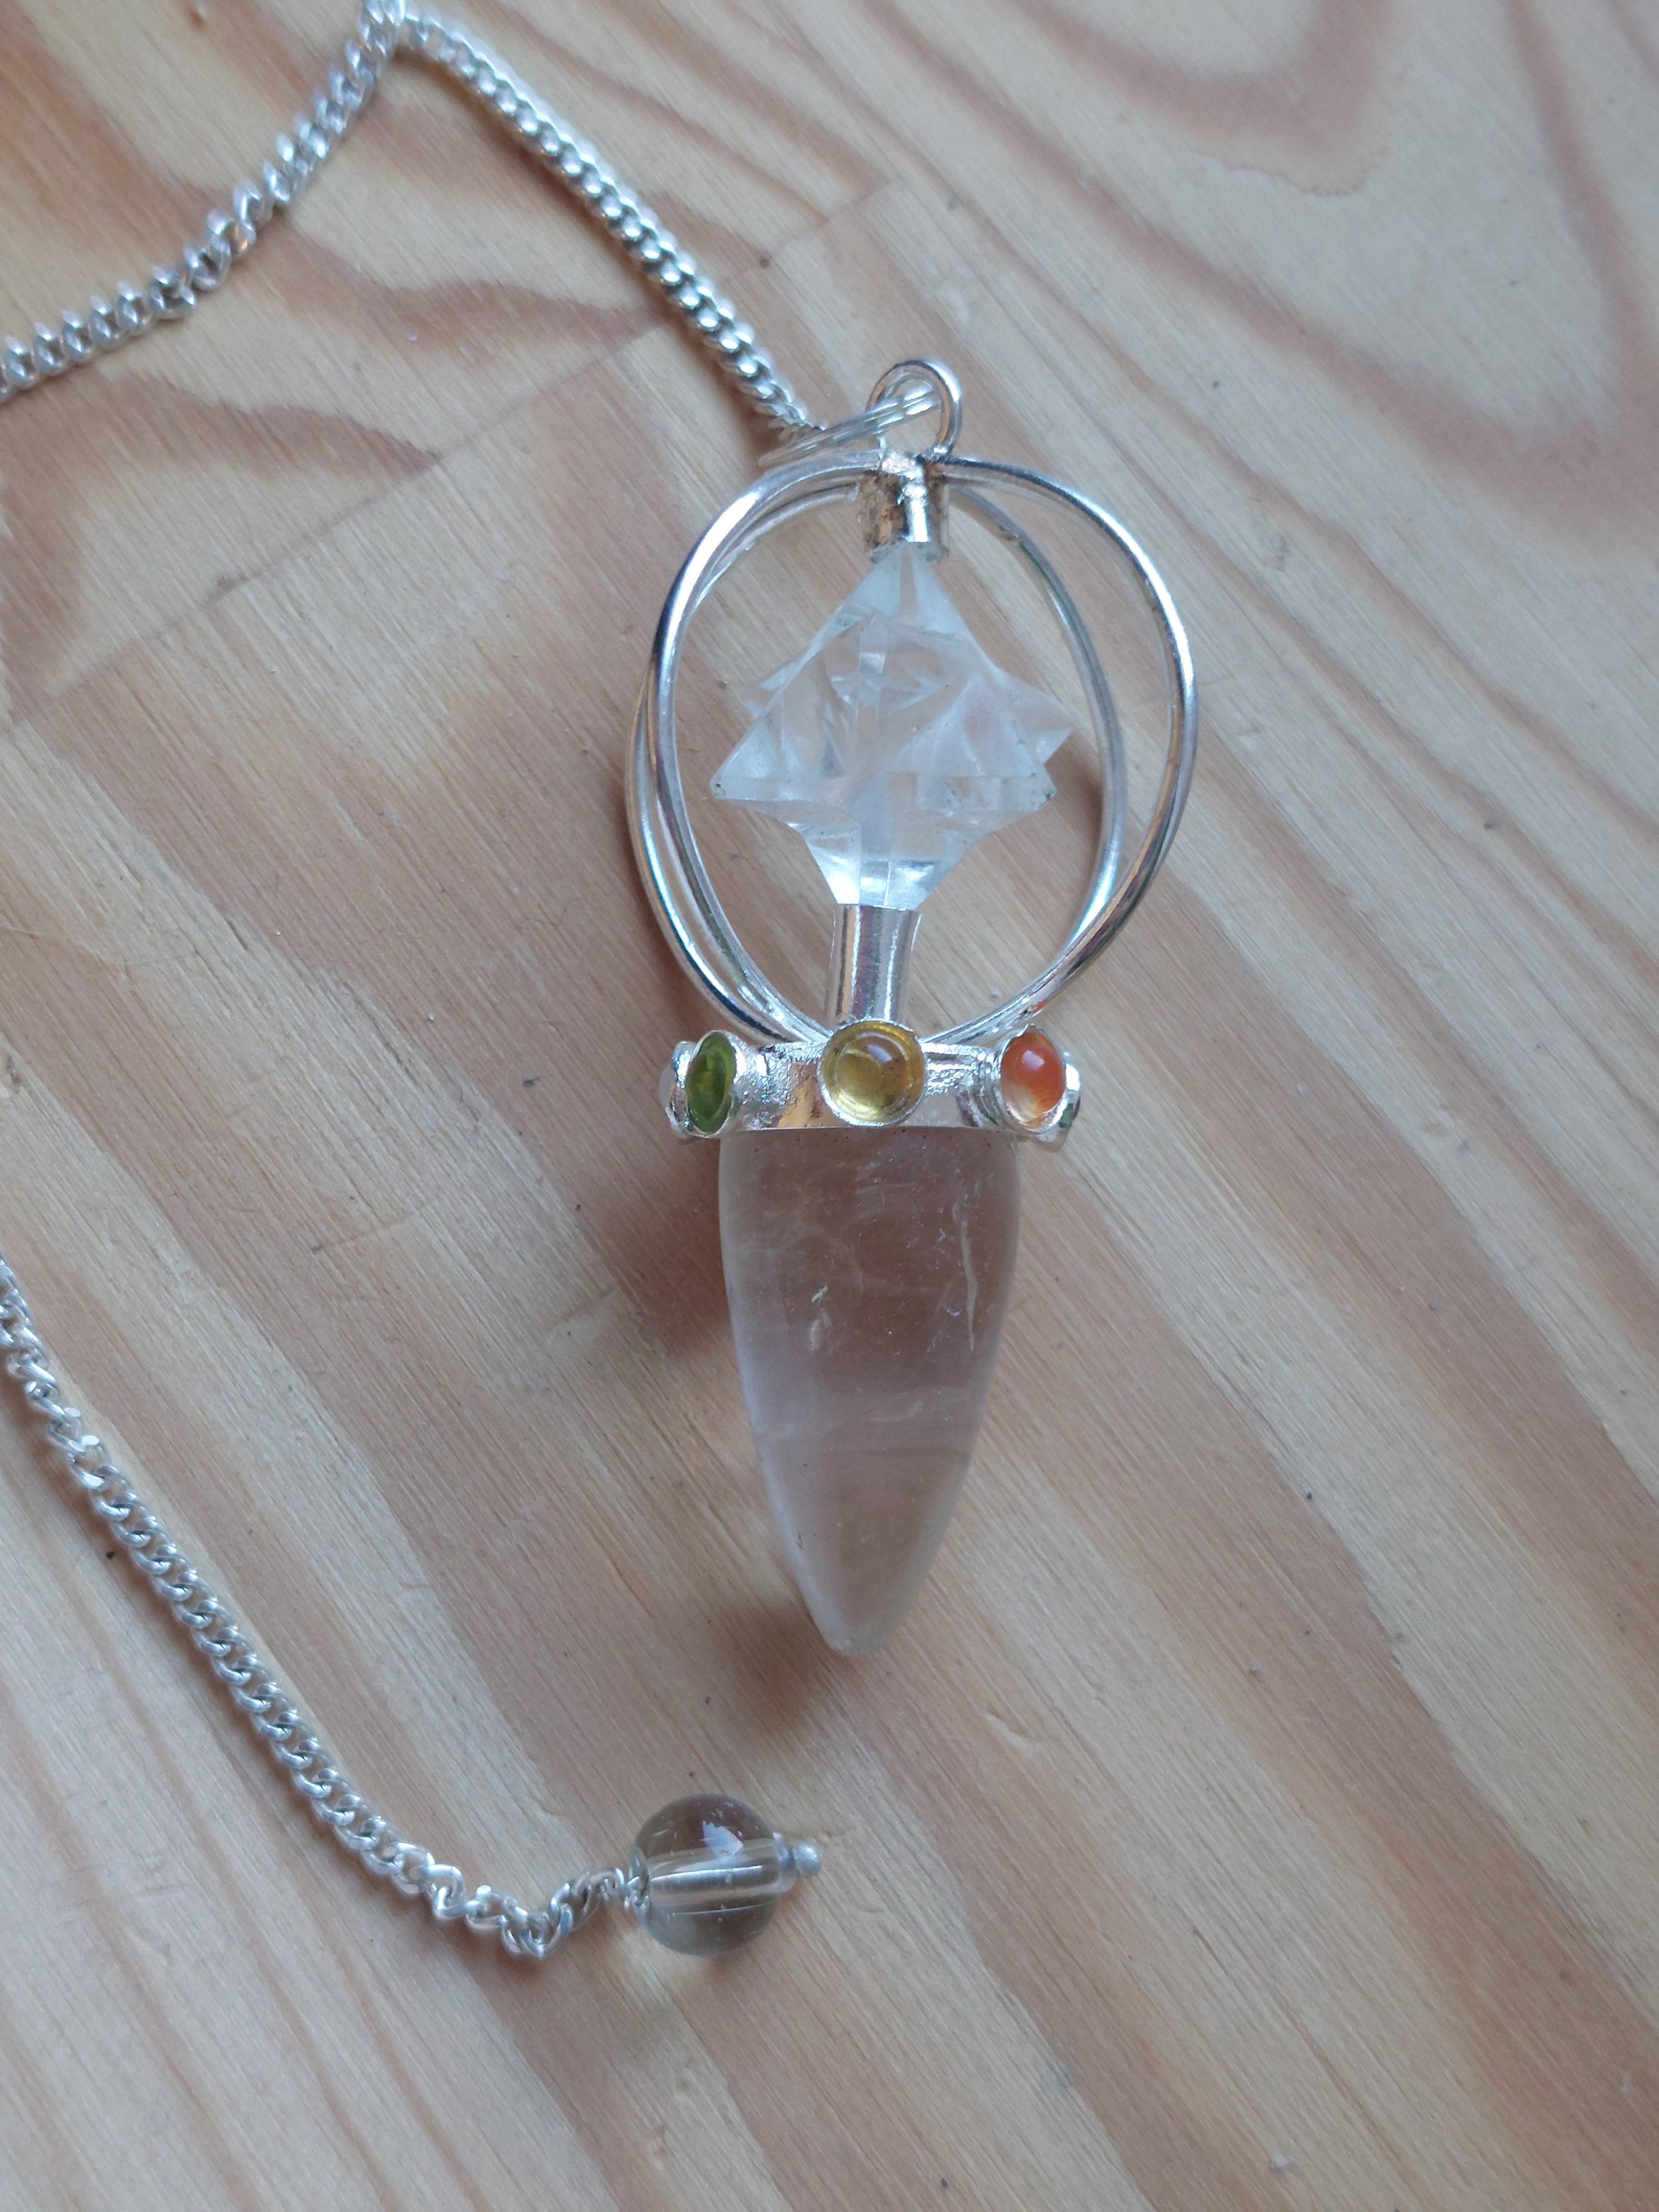 Clear Quartz Point Pendulum with Merkaba and 7 Stones